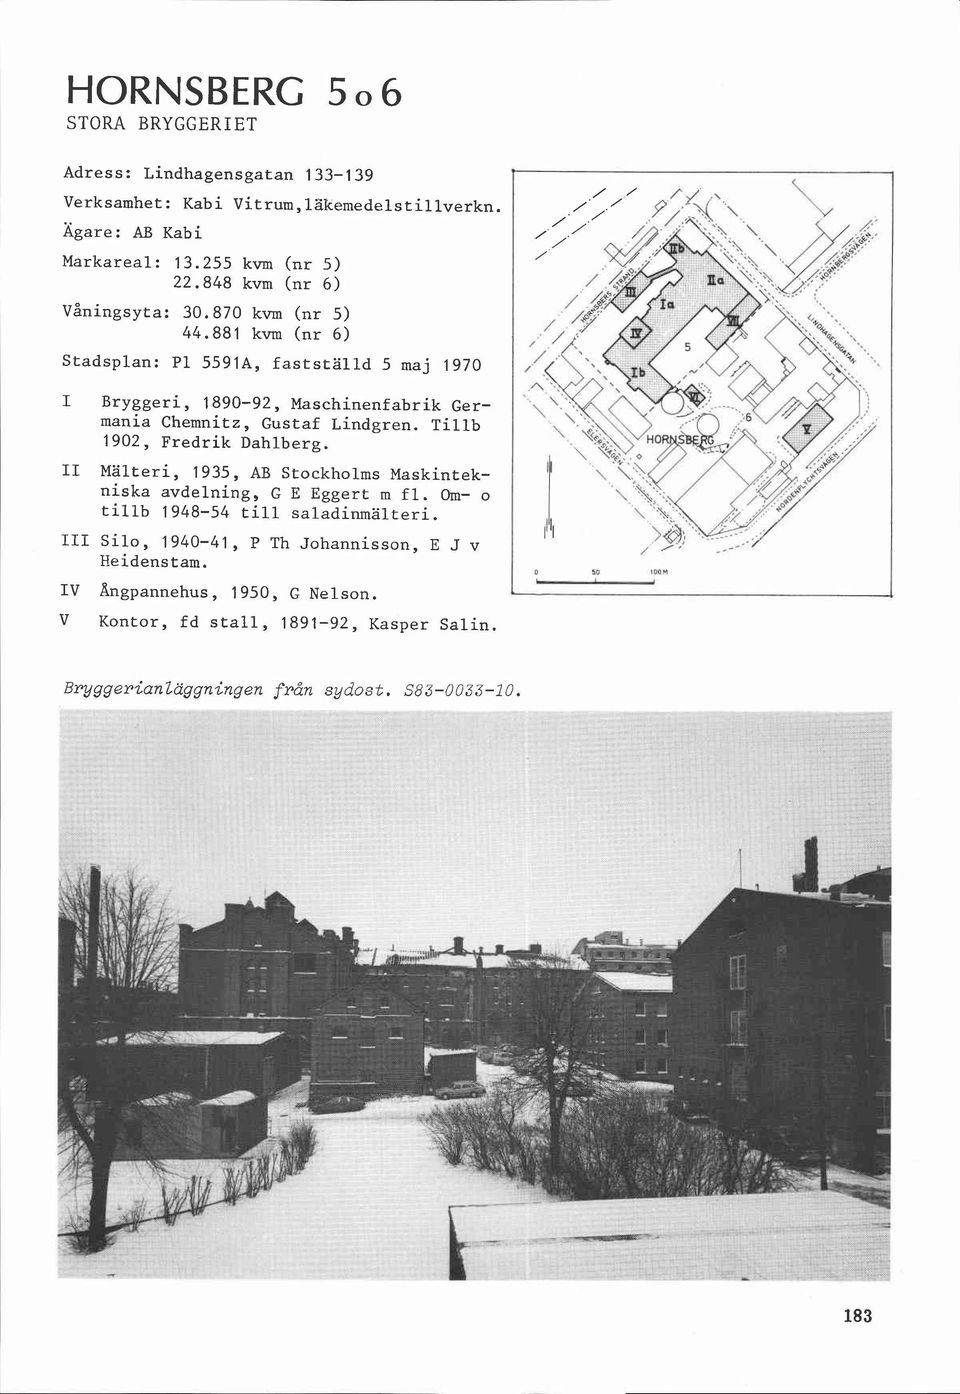 881 kvm (nr 6) Stadsplan: P1 55918, fastställd 5 maj 1970 I Bryggeri, 1890-92, Maschinenfabrik Germania Chemnitz, Gustaf Lindgren. Tillb 1902, Fredrik Dahlberg.